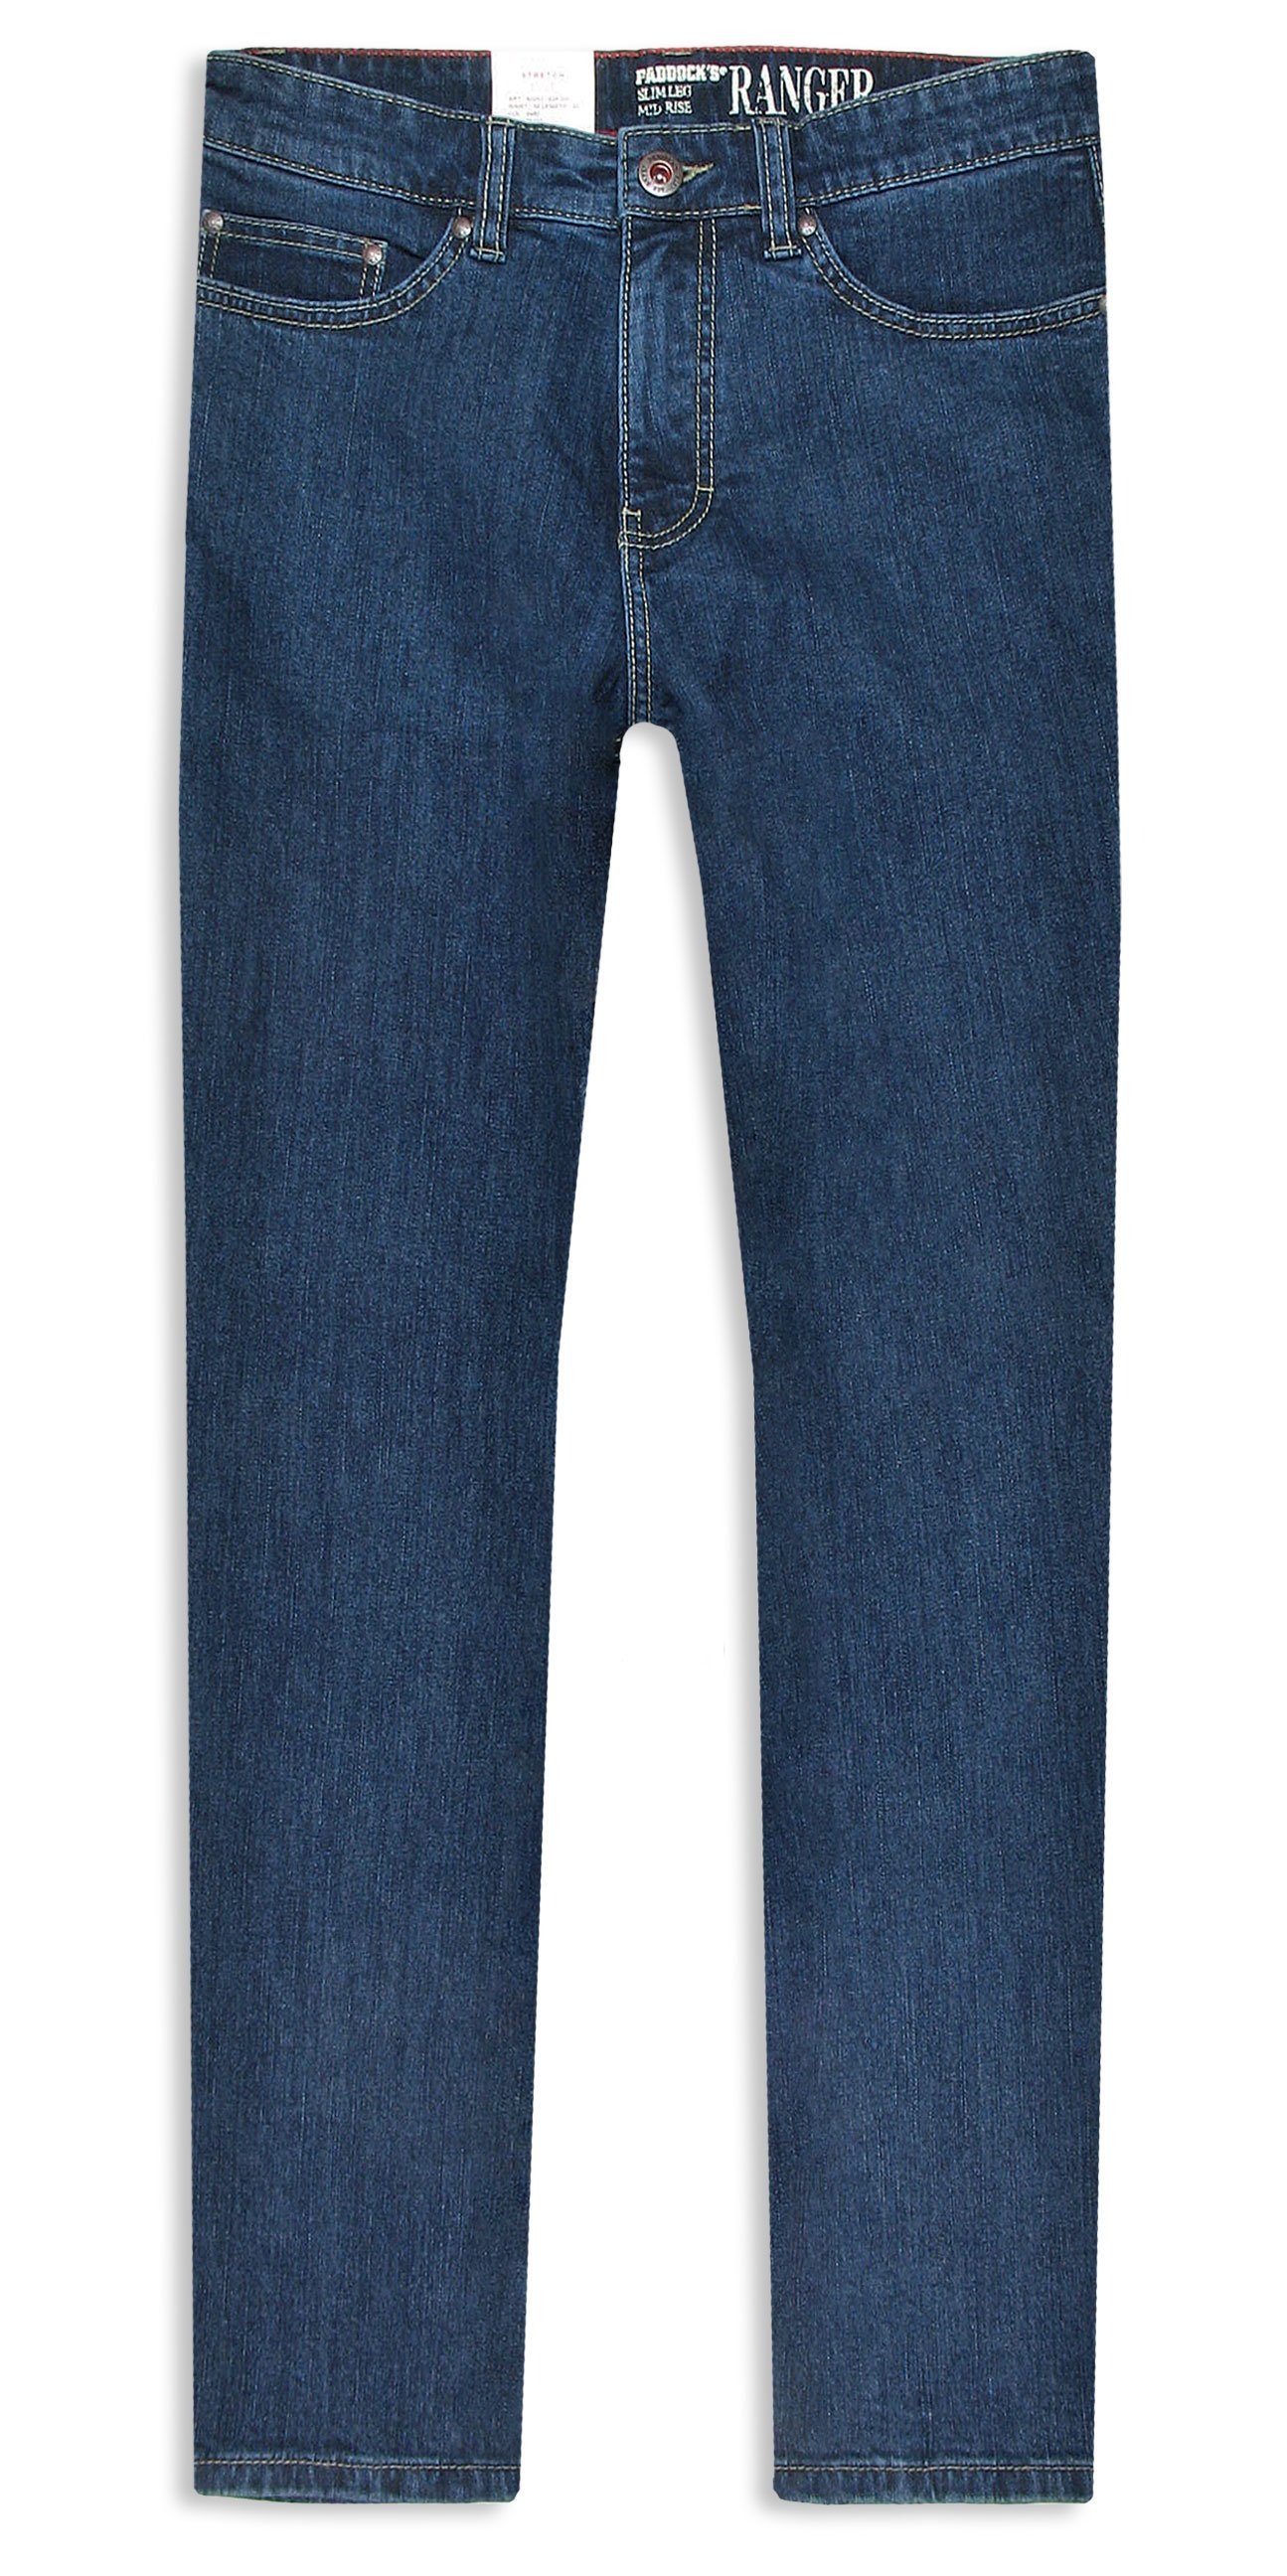 Ospig Paddock's 5-Pocket-Jeans Ranger Denim stone 4480 blue Stretch dark